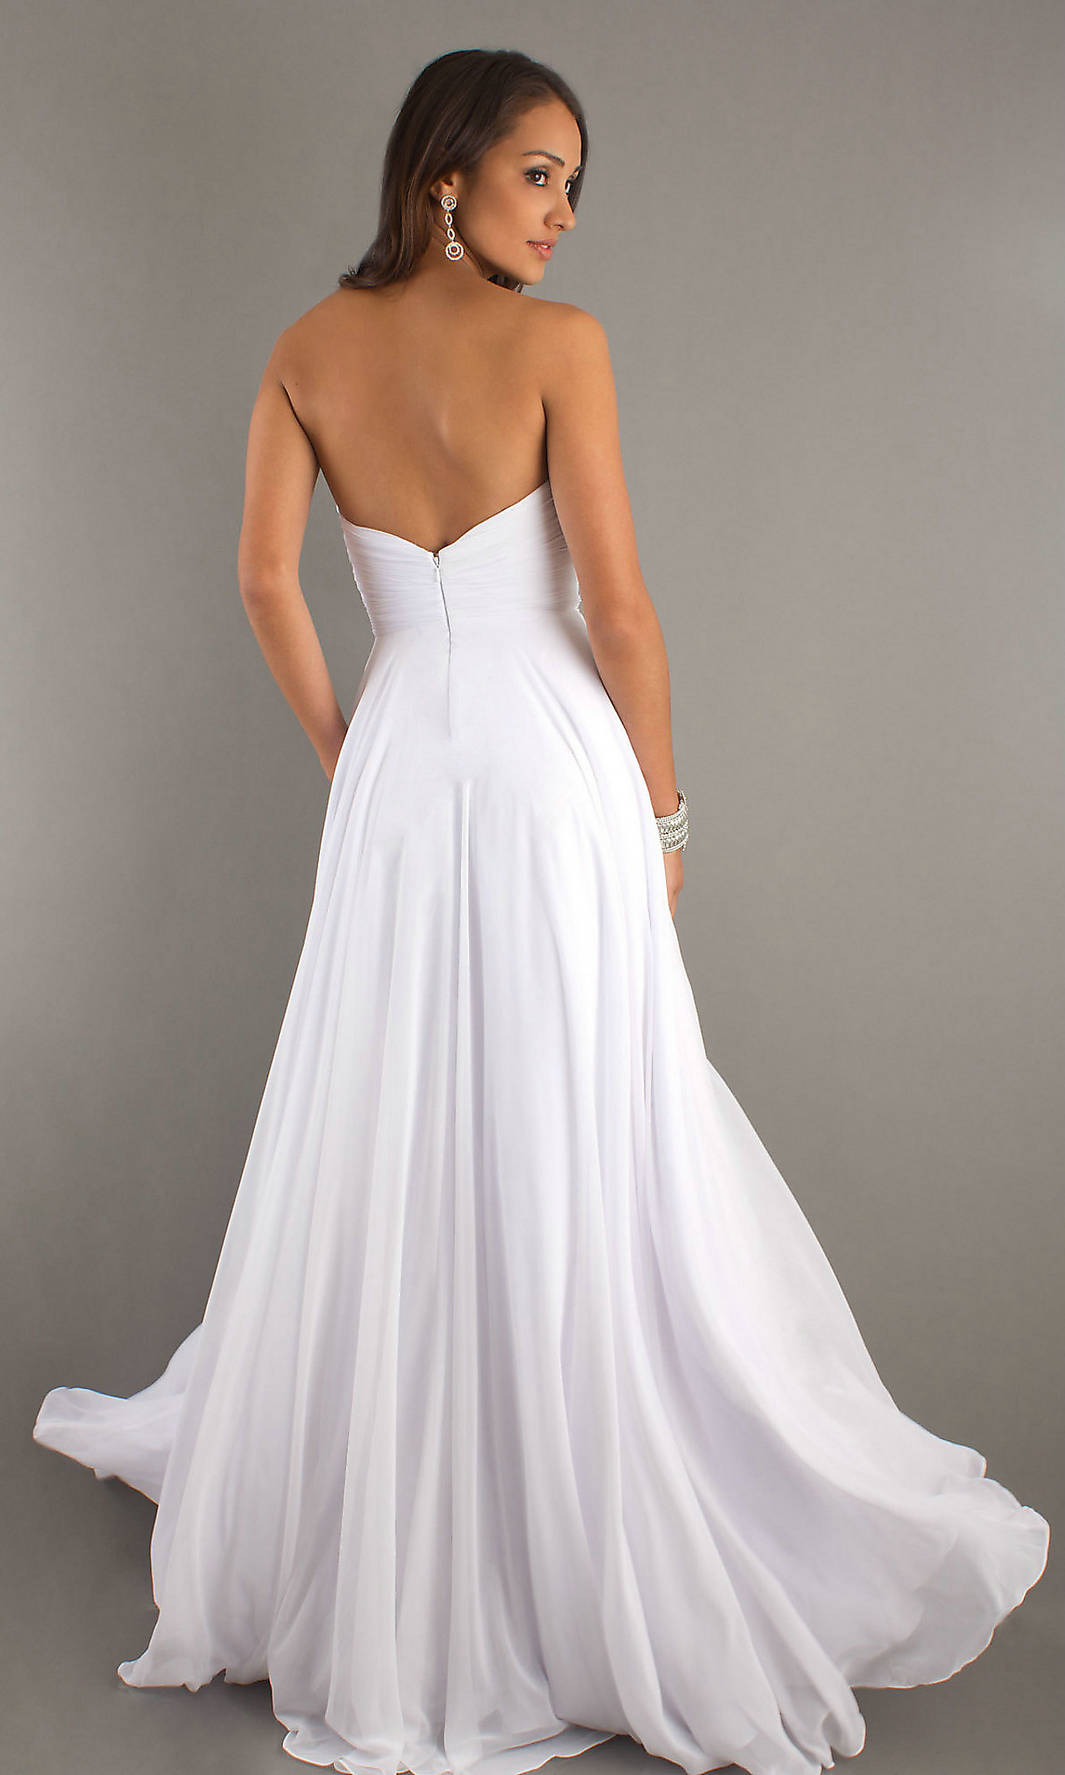 all white prom dress